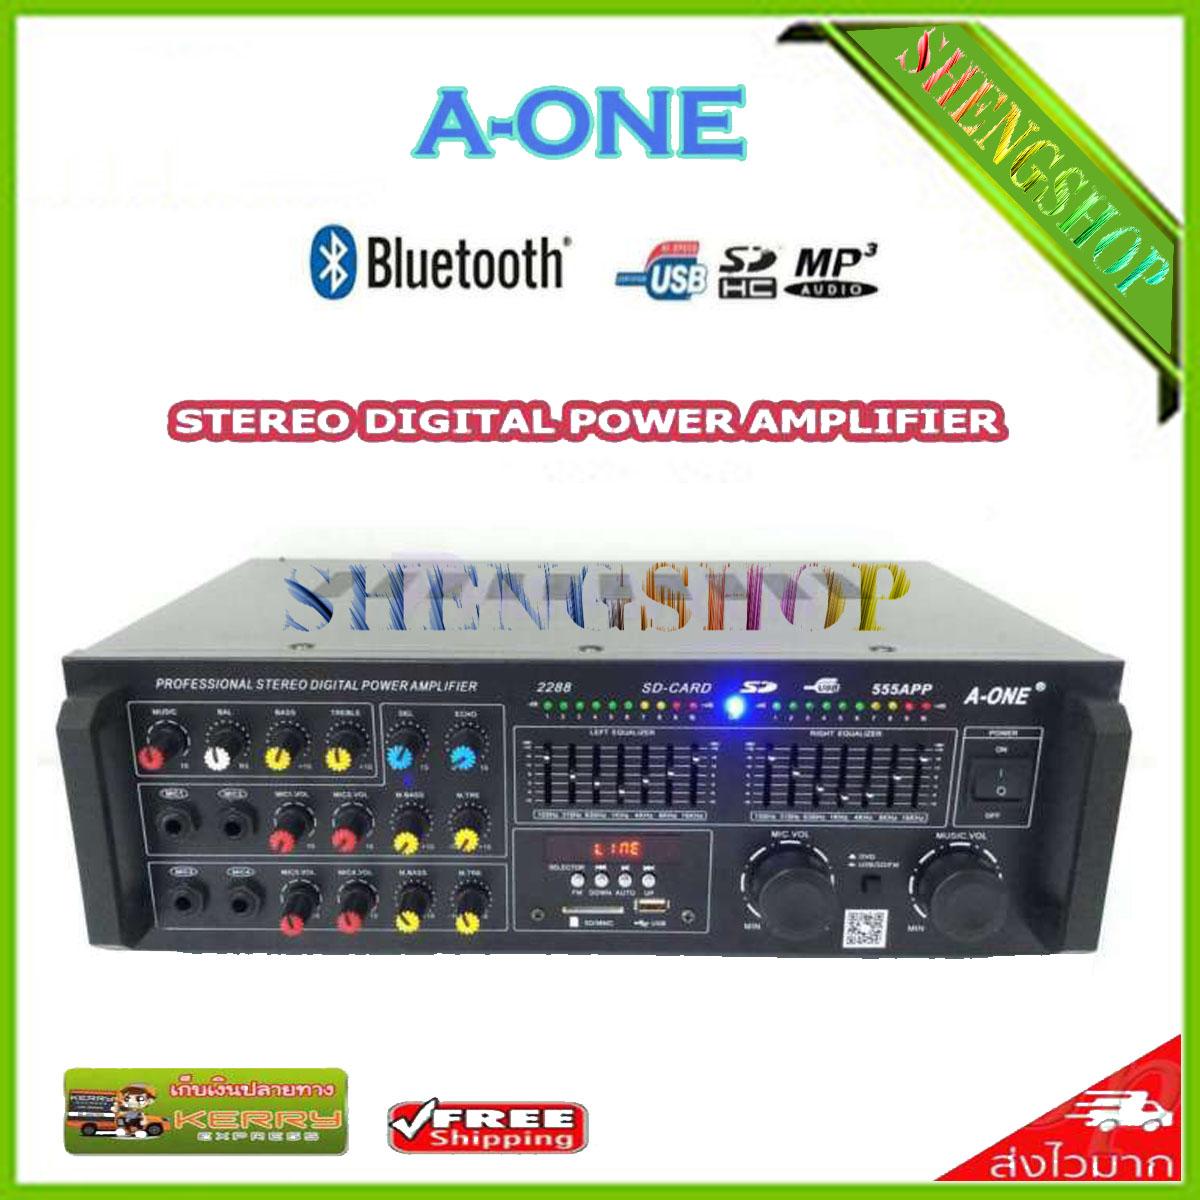 SHENG SHOPSMC เครื่องแอมป์ขยายเสียง STEREO DIGITAL ECHO AUDIO POWER AMPLIFIER BLUETOOTH USB MP3 SD CARD รุ่น 555